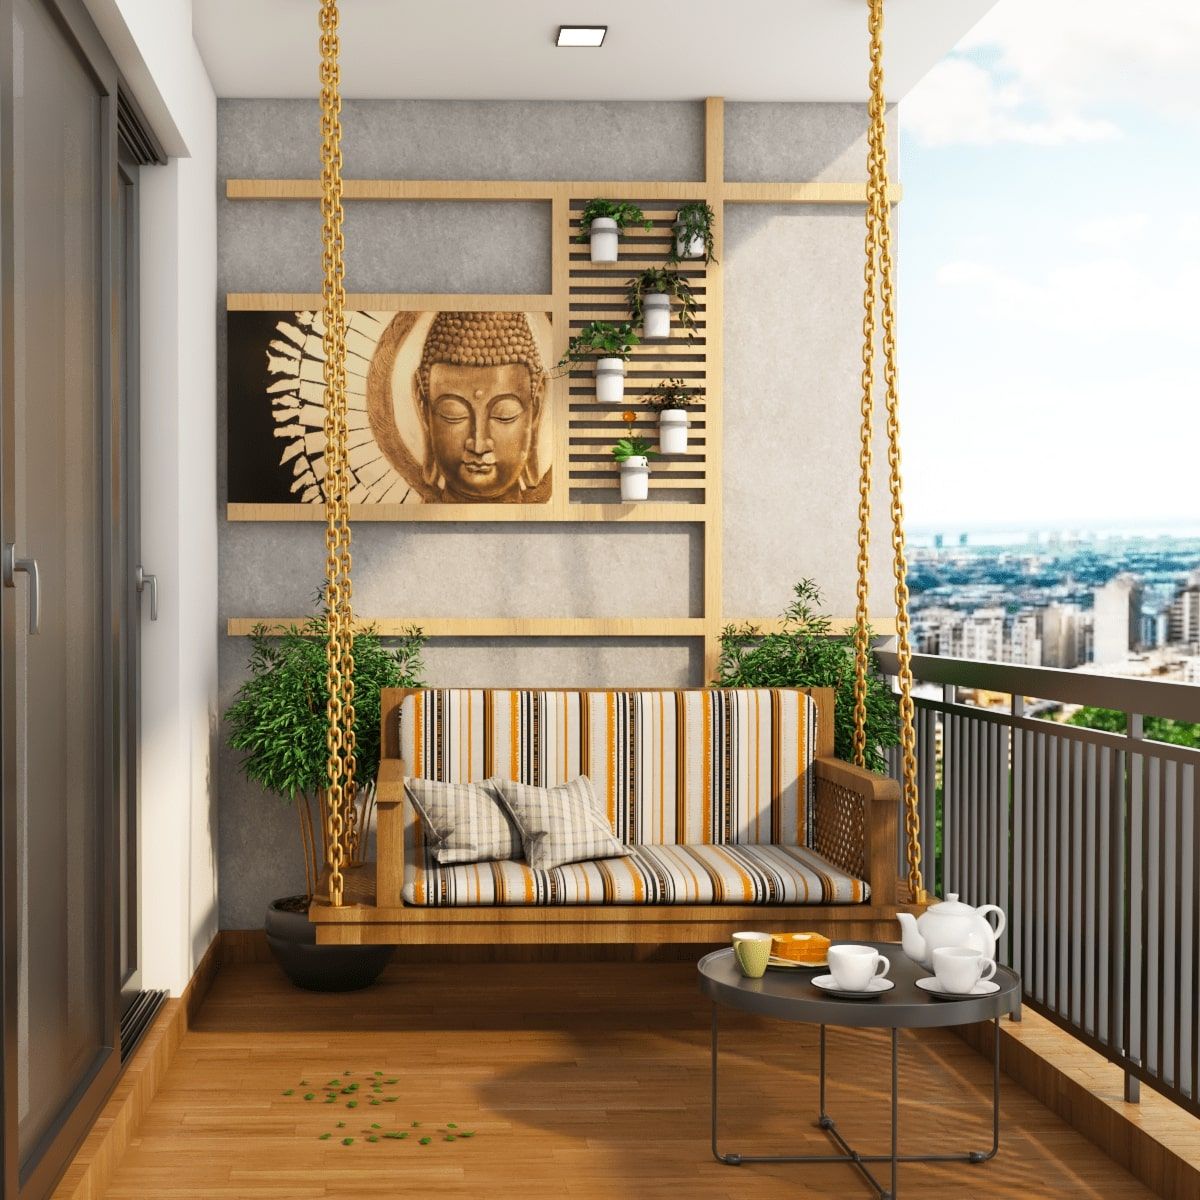 Contemporary Balcony Design With Dark Wooden Flooring